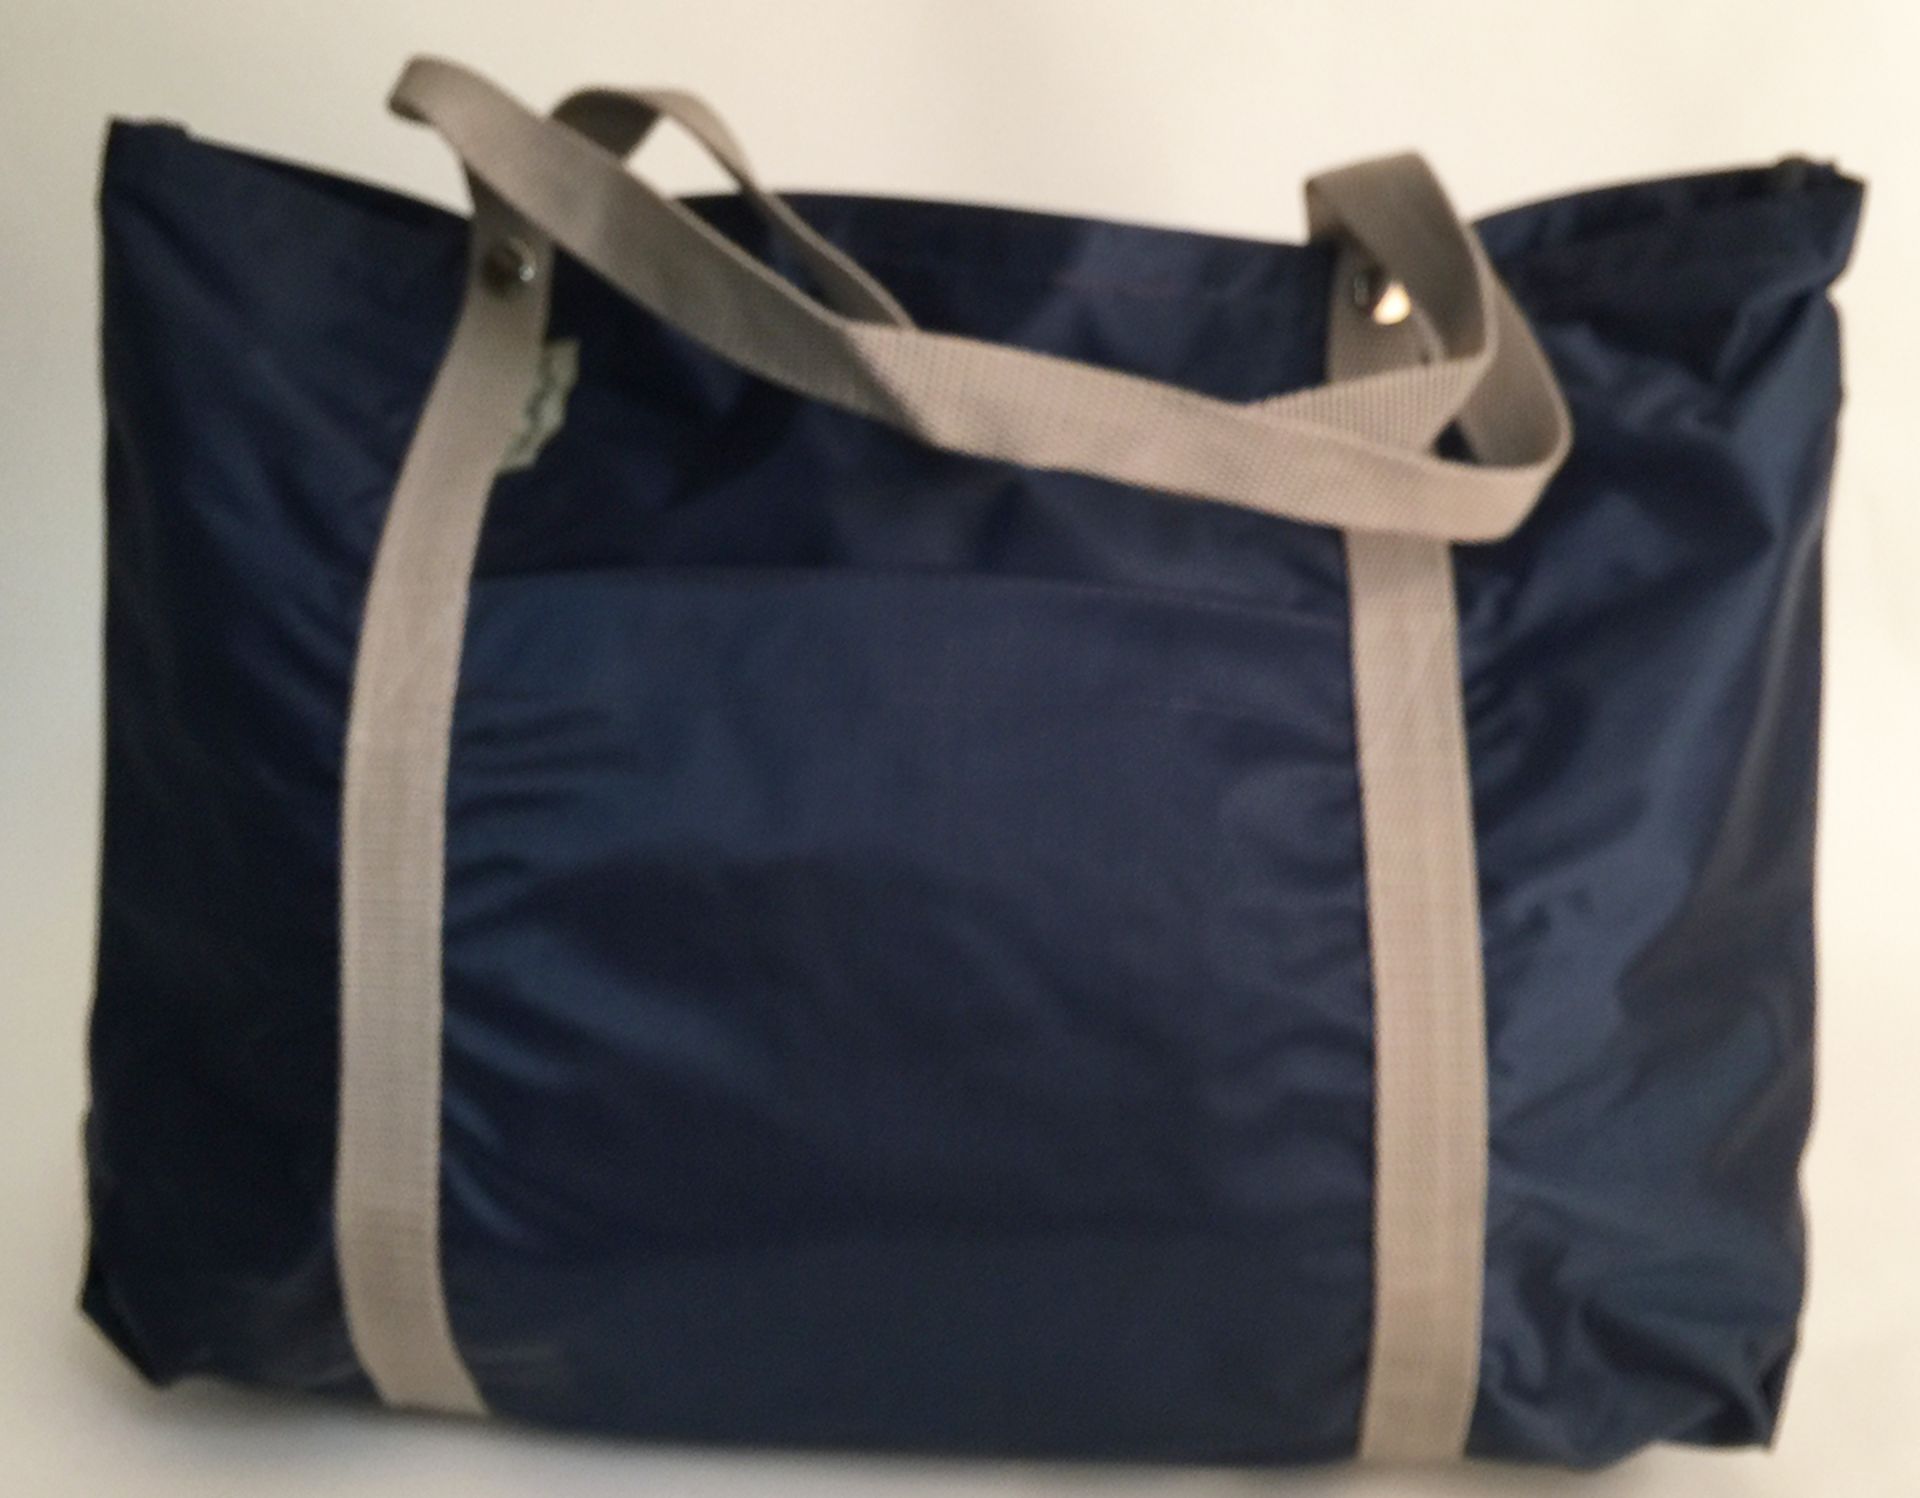 (35) Waterproof tote bag designed for visiting nurses